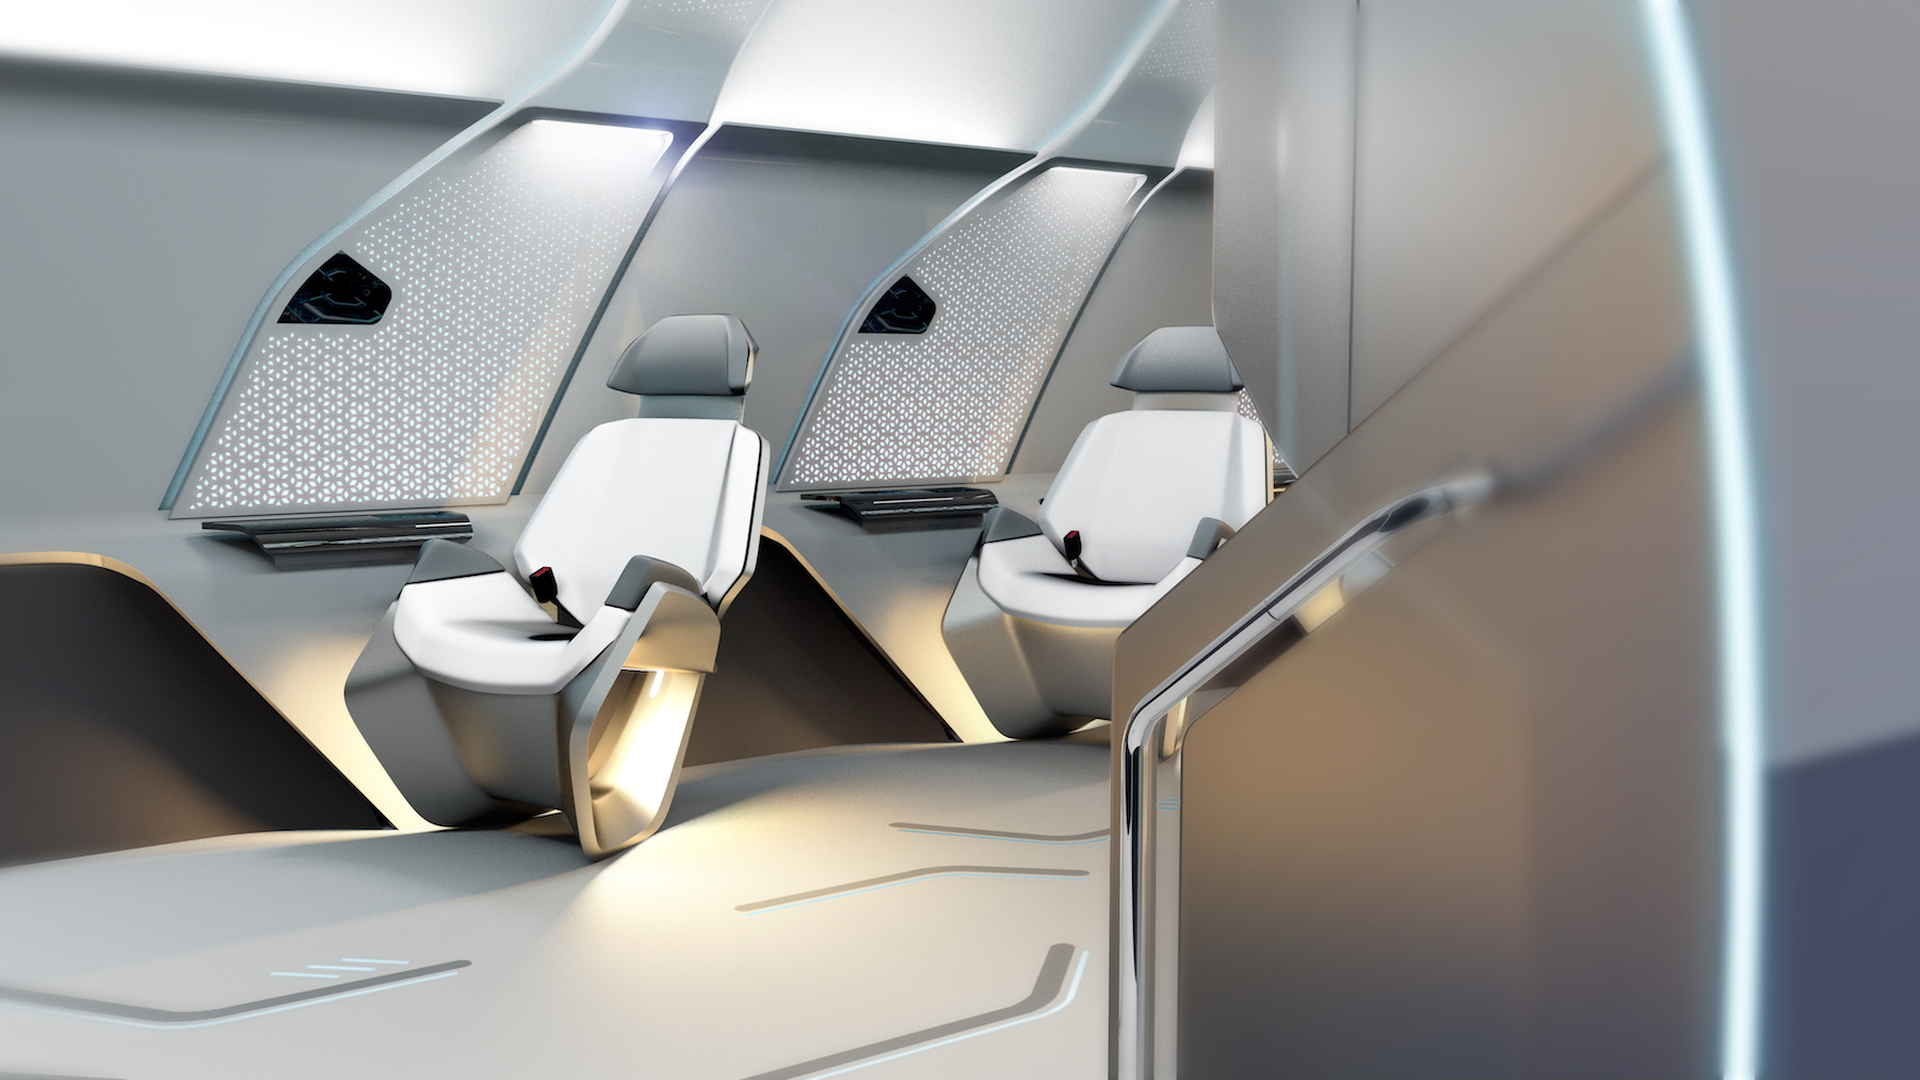 BMW Designworks Virgin Hyperloop One passenger capsule concept